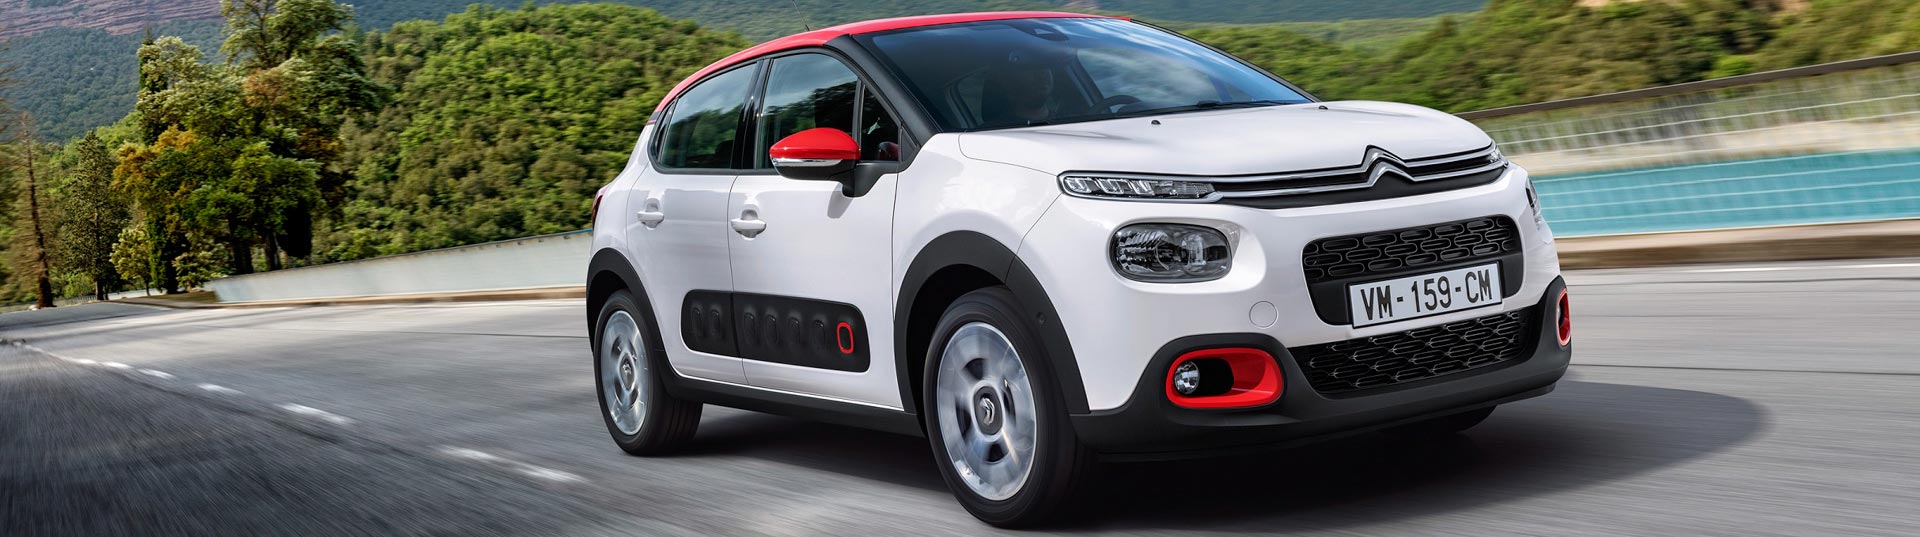 Novo Citroën C3